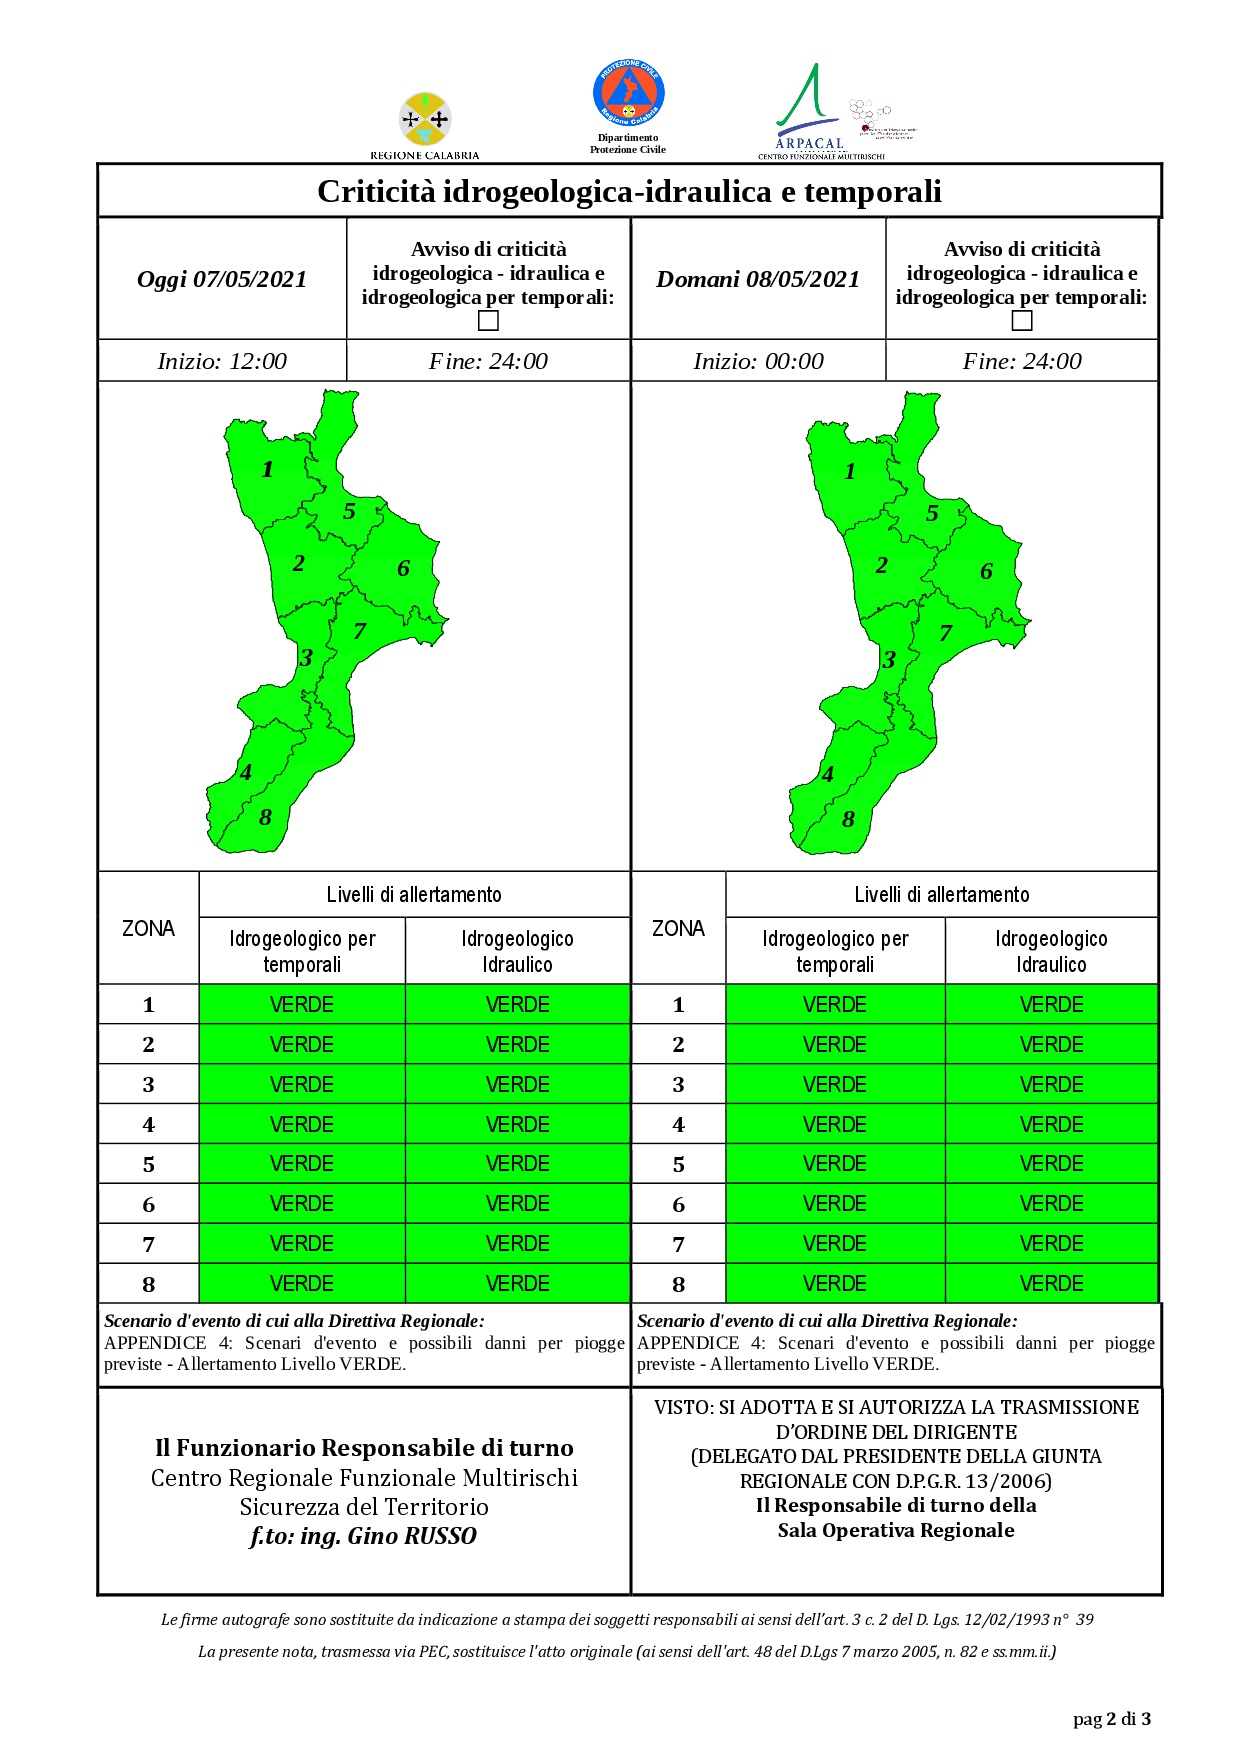 Criticità idrogeologica-idraulica e temporali in Calabria 07-05-2021